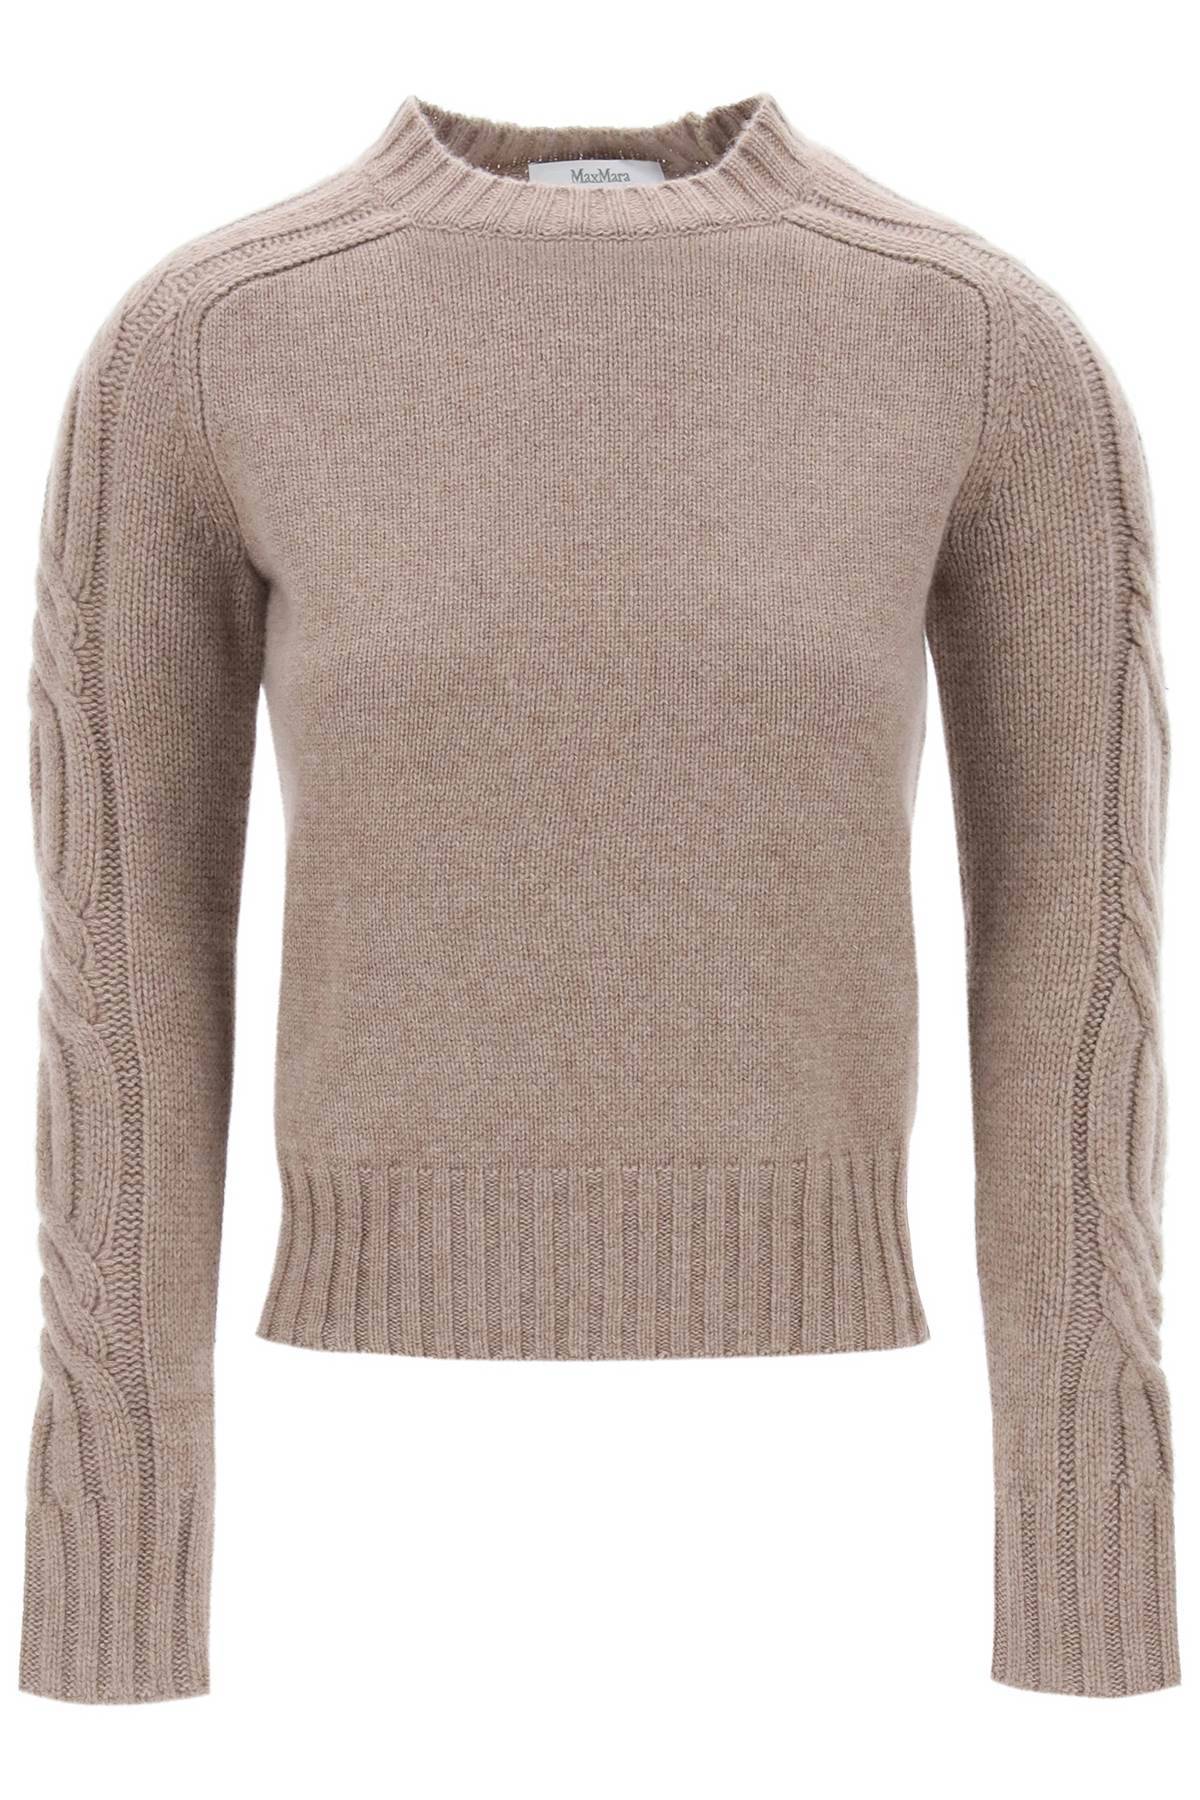 Max Mara Cashmere Berlin Pullover Sweater In Khaki